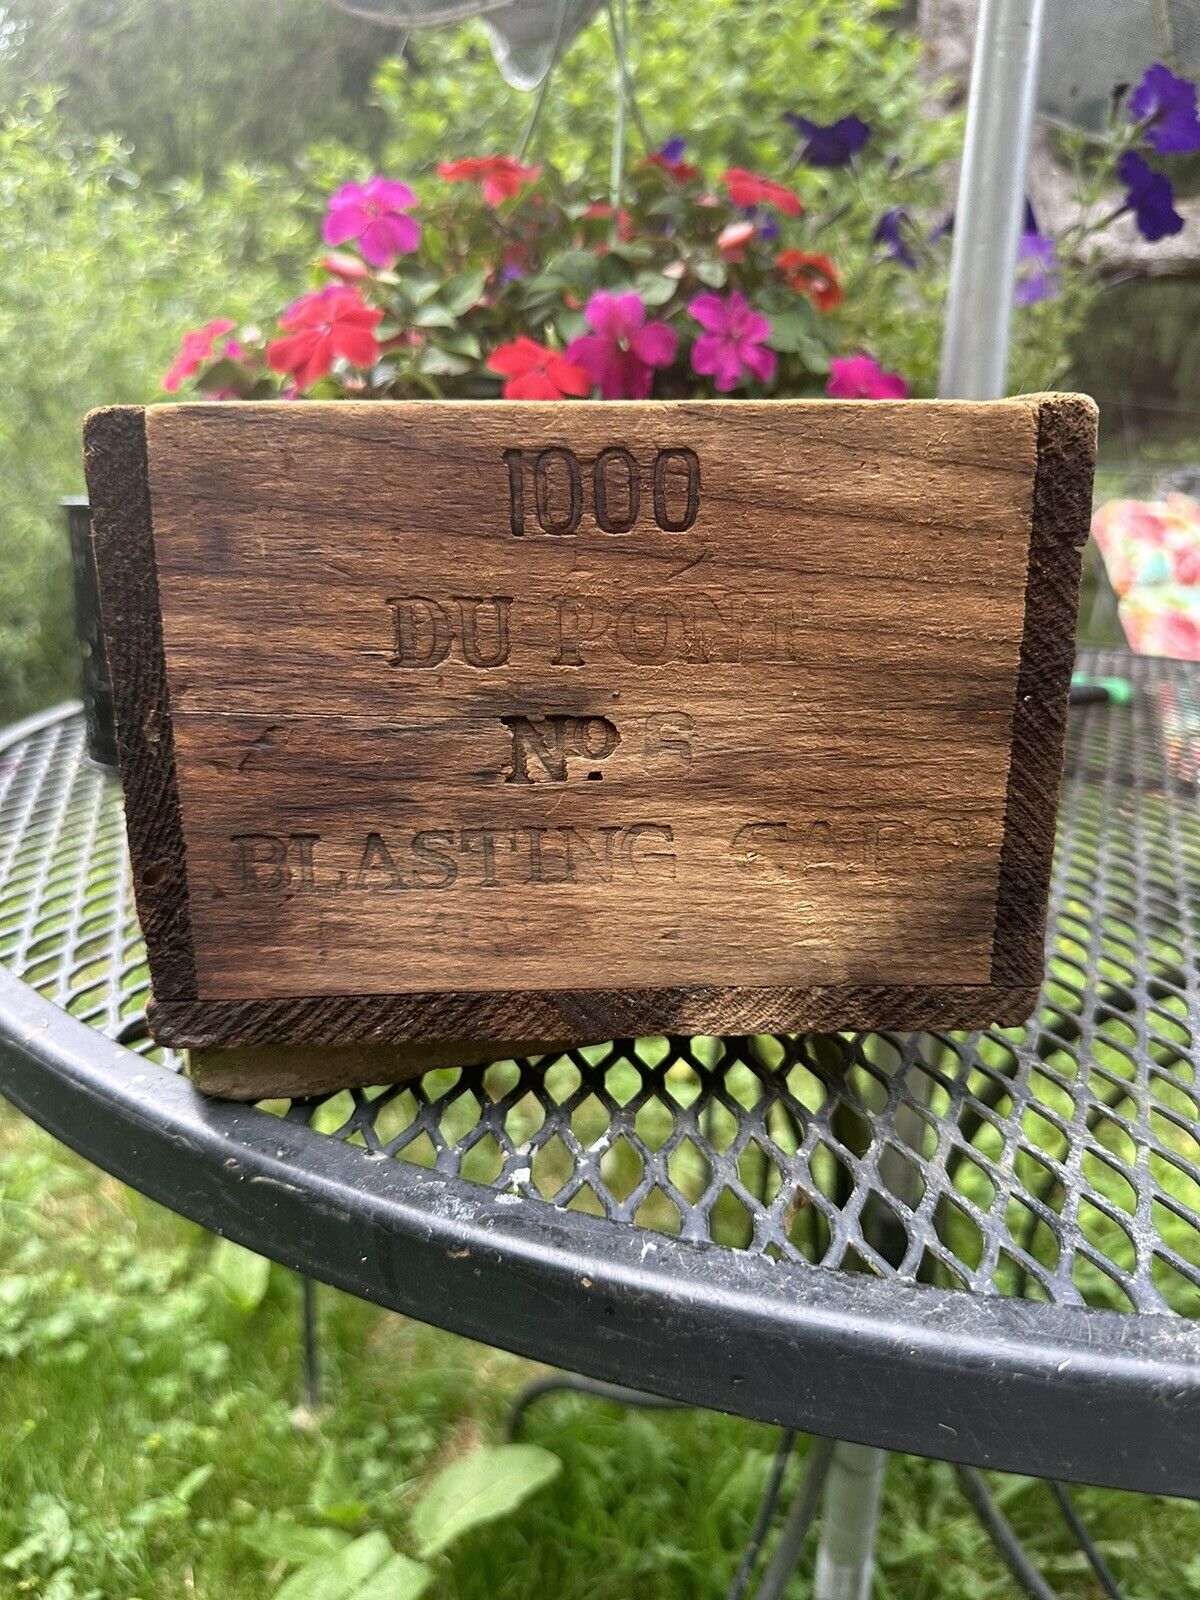 Vintage Wood Crate Box DuPont Blasting Caps Explosives Dynamite